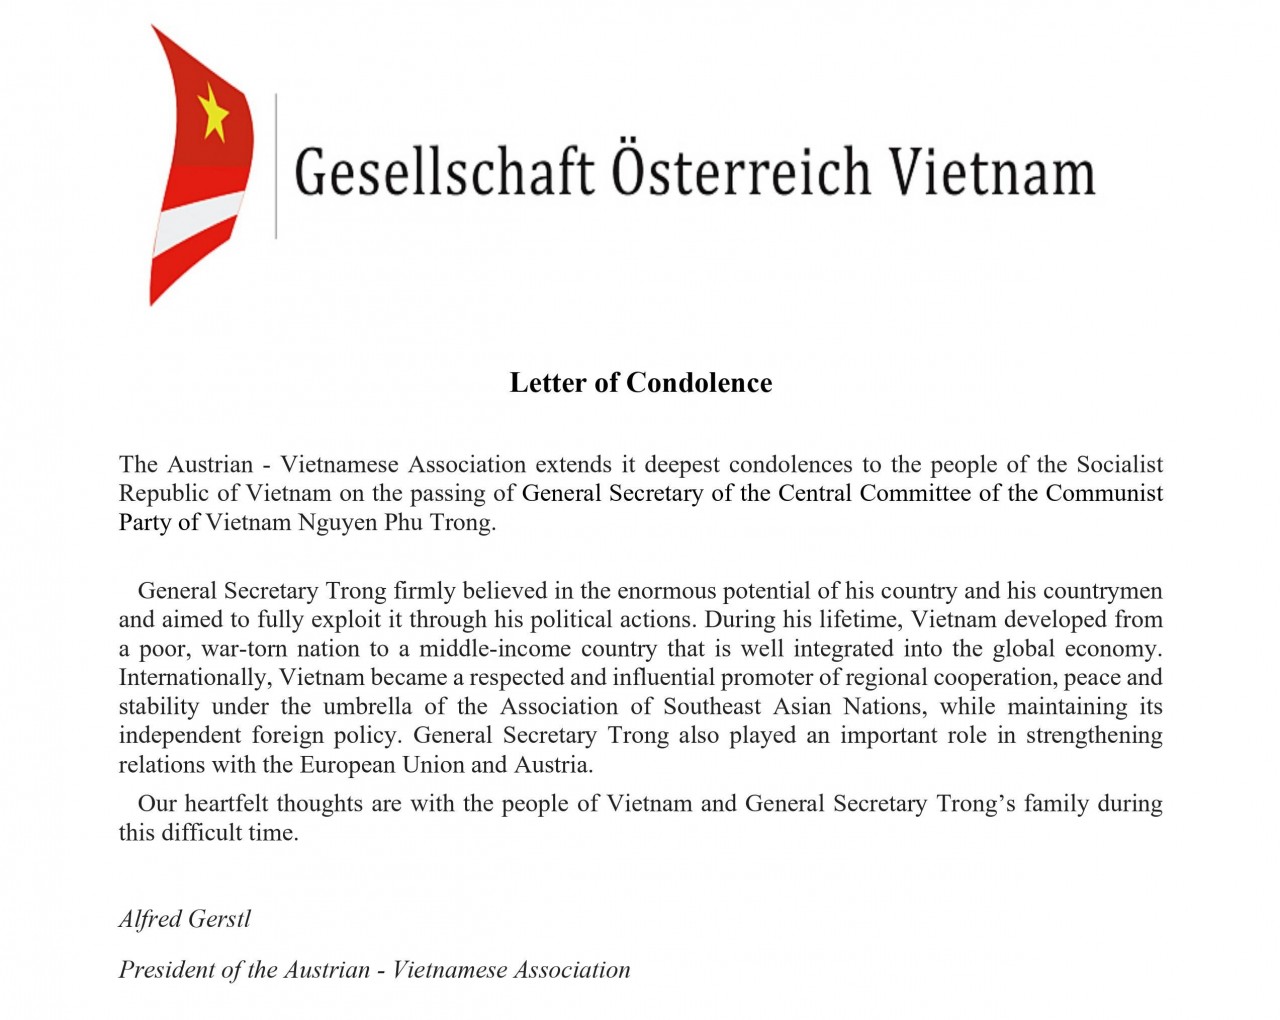 Letter of Condolence From Austrian - Vietnamese Association